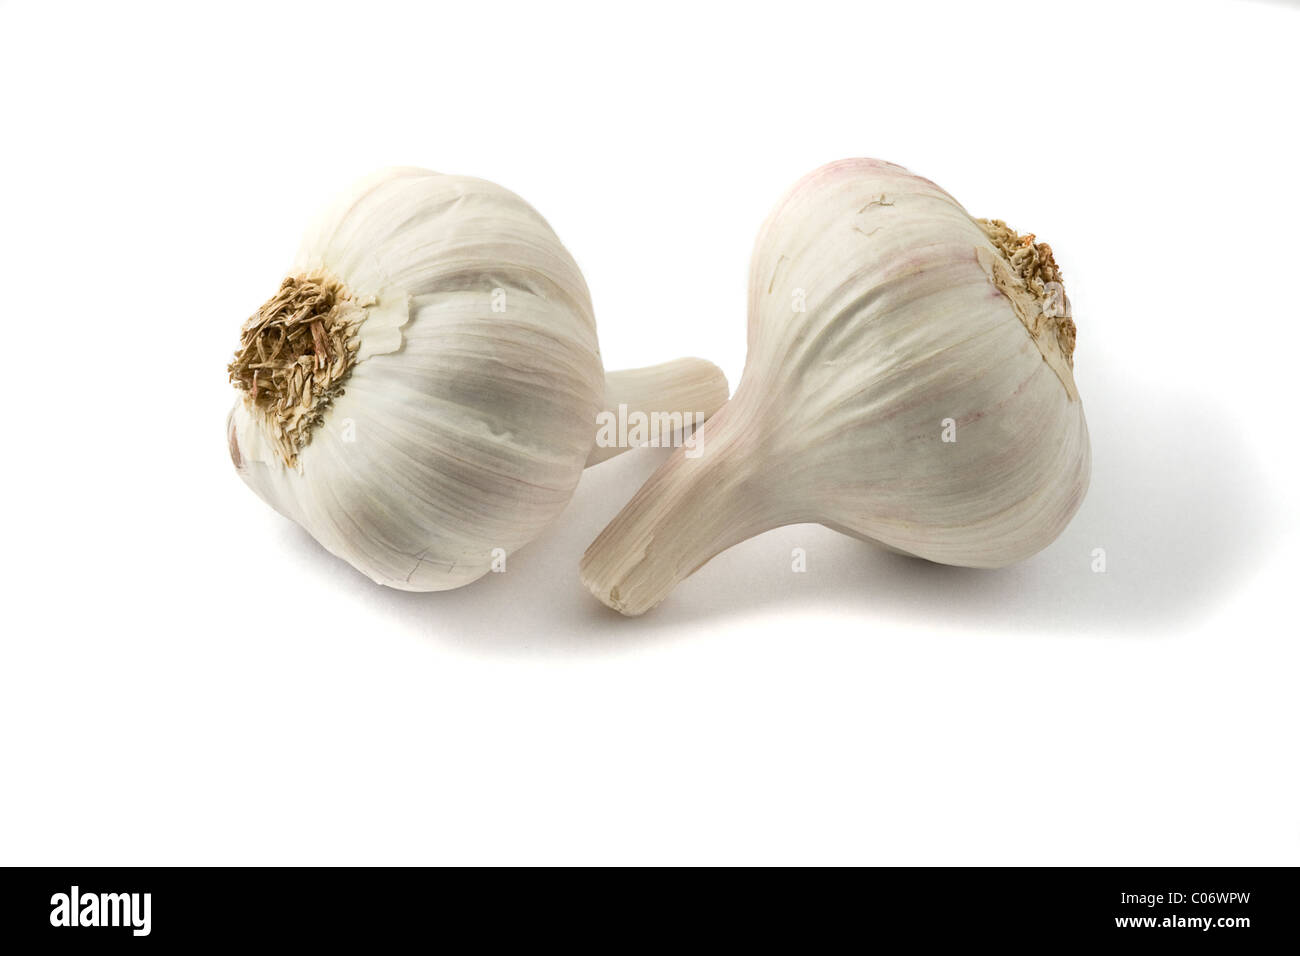 Garlic bulbs on a white background Stock Photo